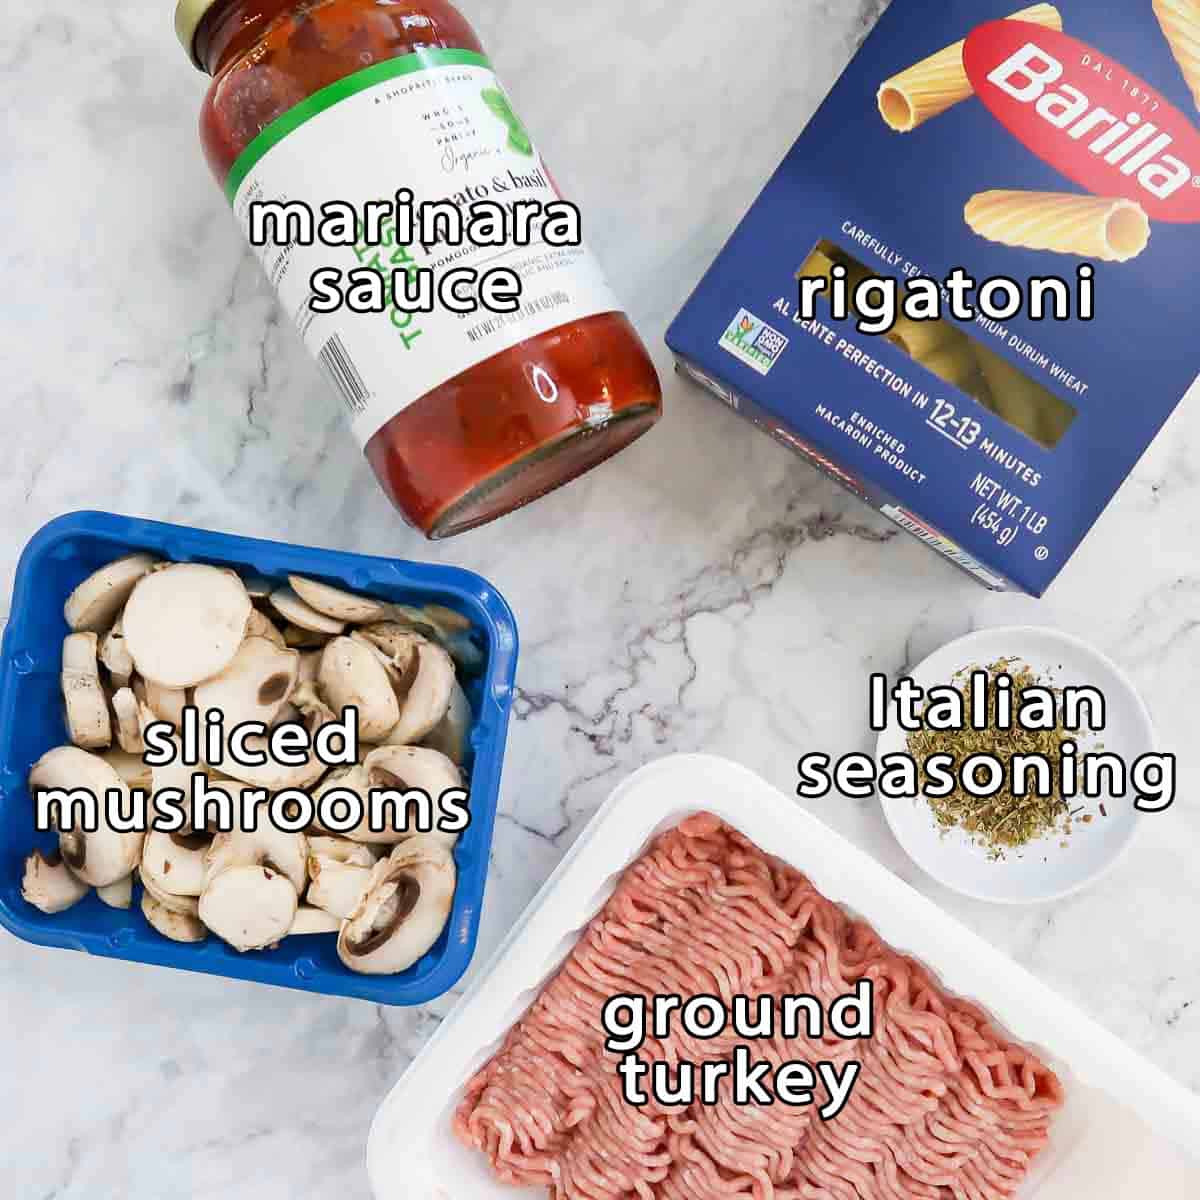 Overhead shot of ingredients - marinara sauce, rigatoni, sliced mushrooms, ground turkey, and Italian seasoning.